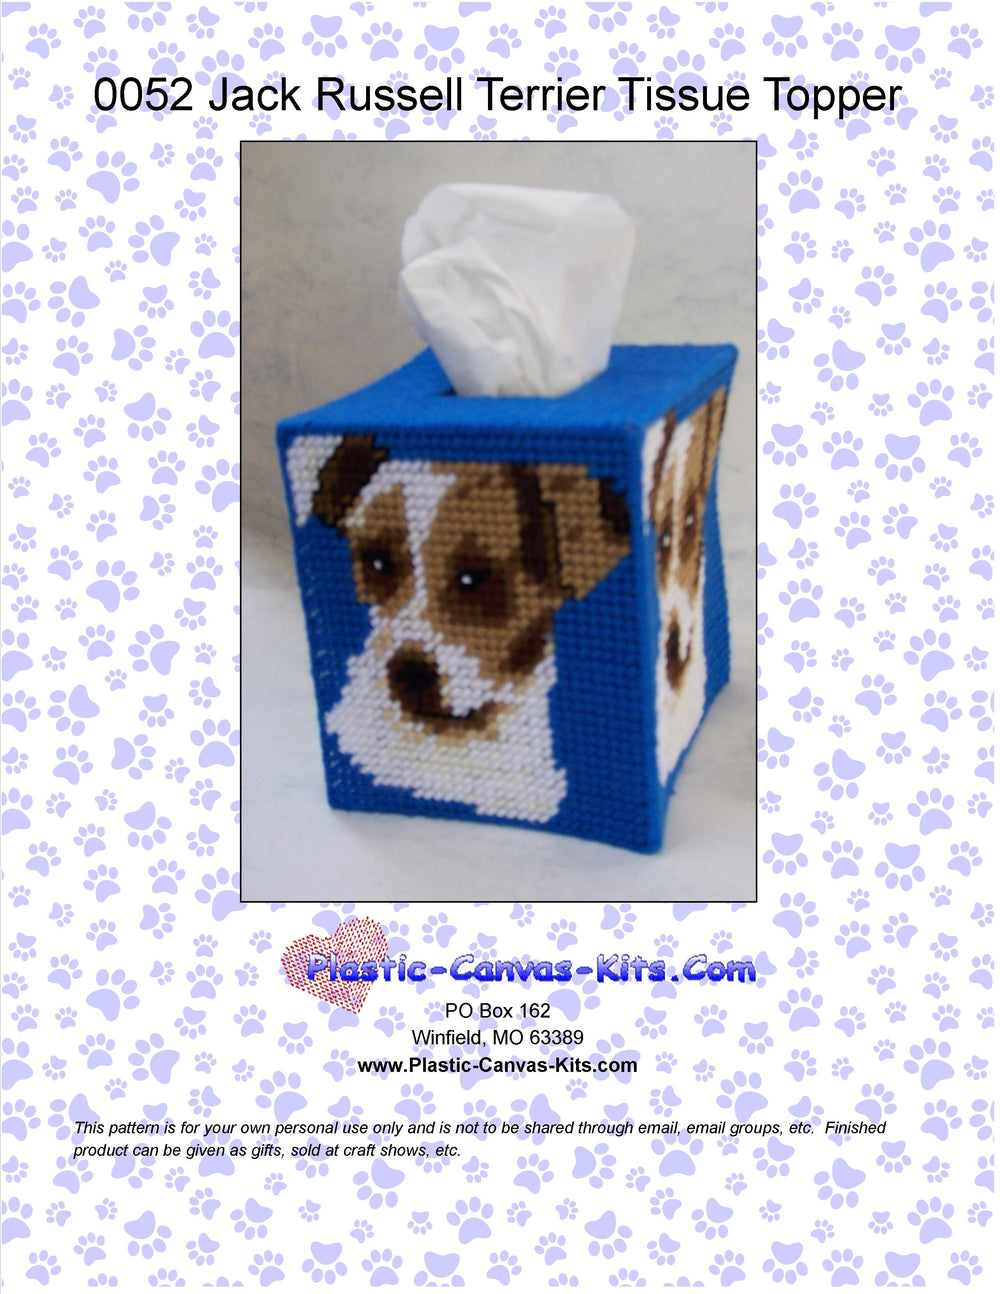 Jack Russell Terrier Tissue Topper